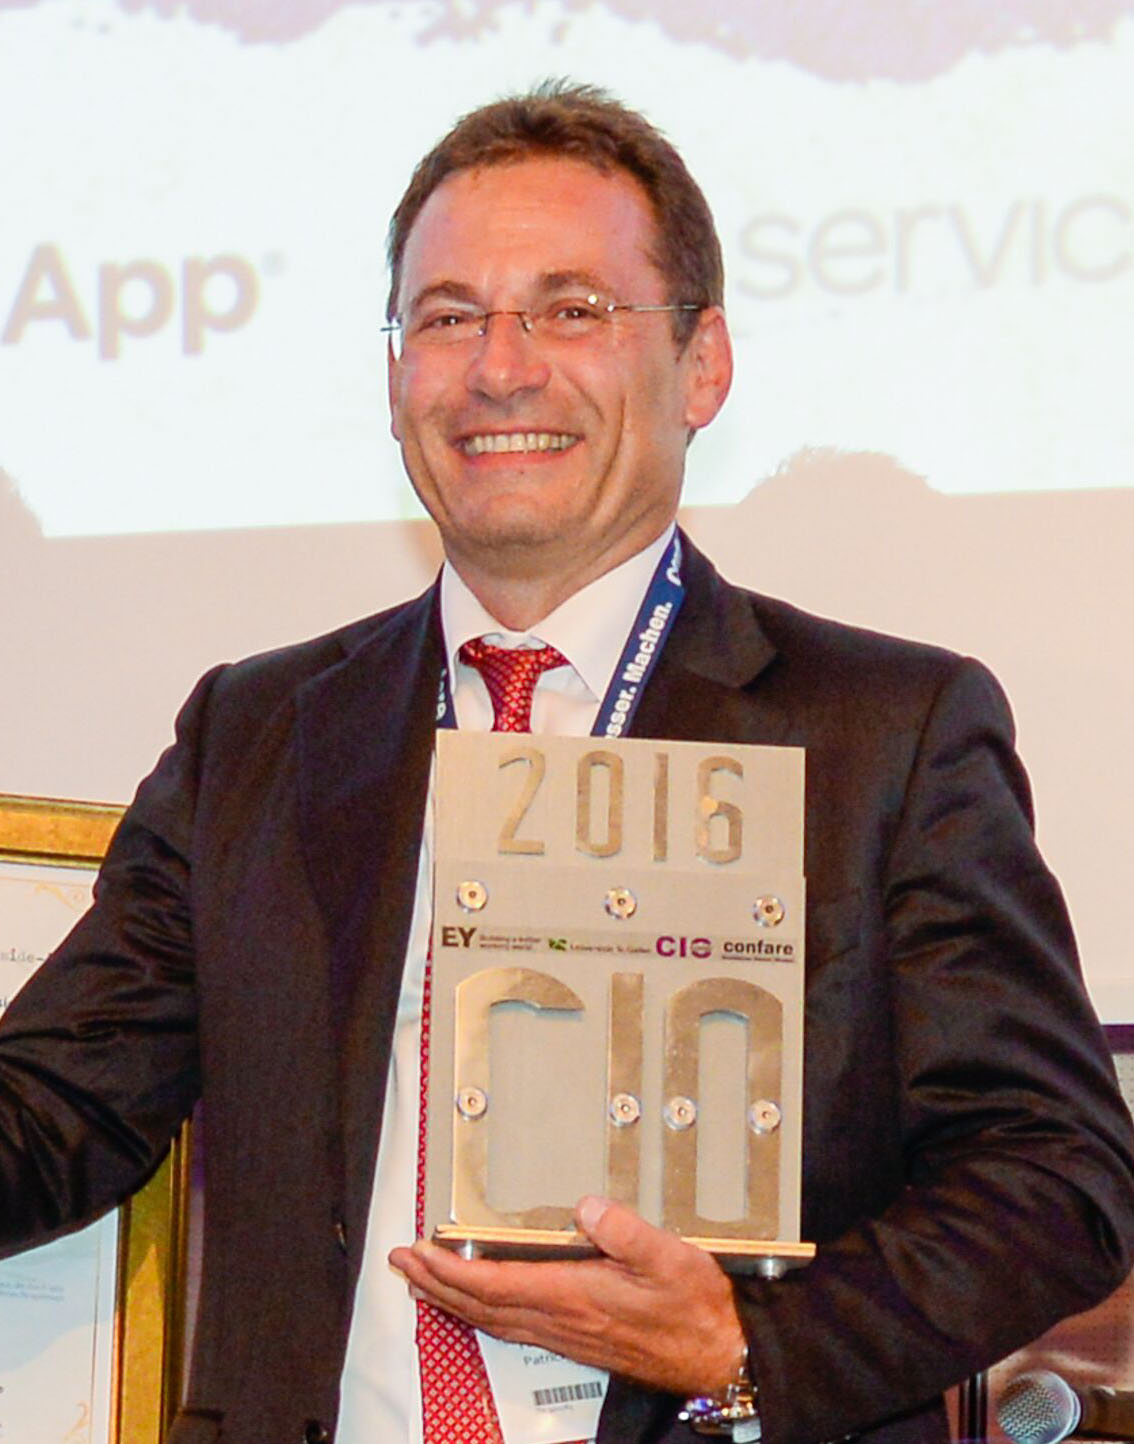 CIO Award 2016 geht an Amag-CIO Patrick Freudiger 